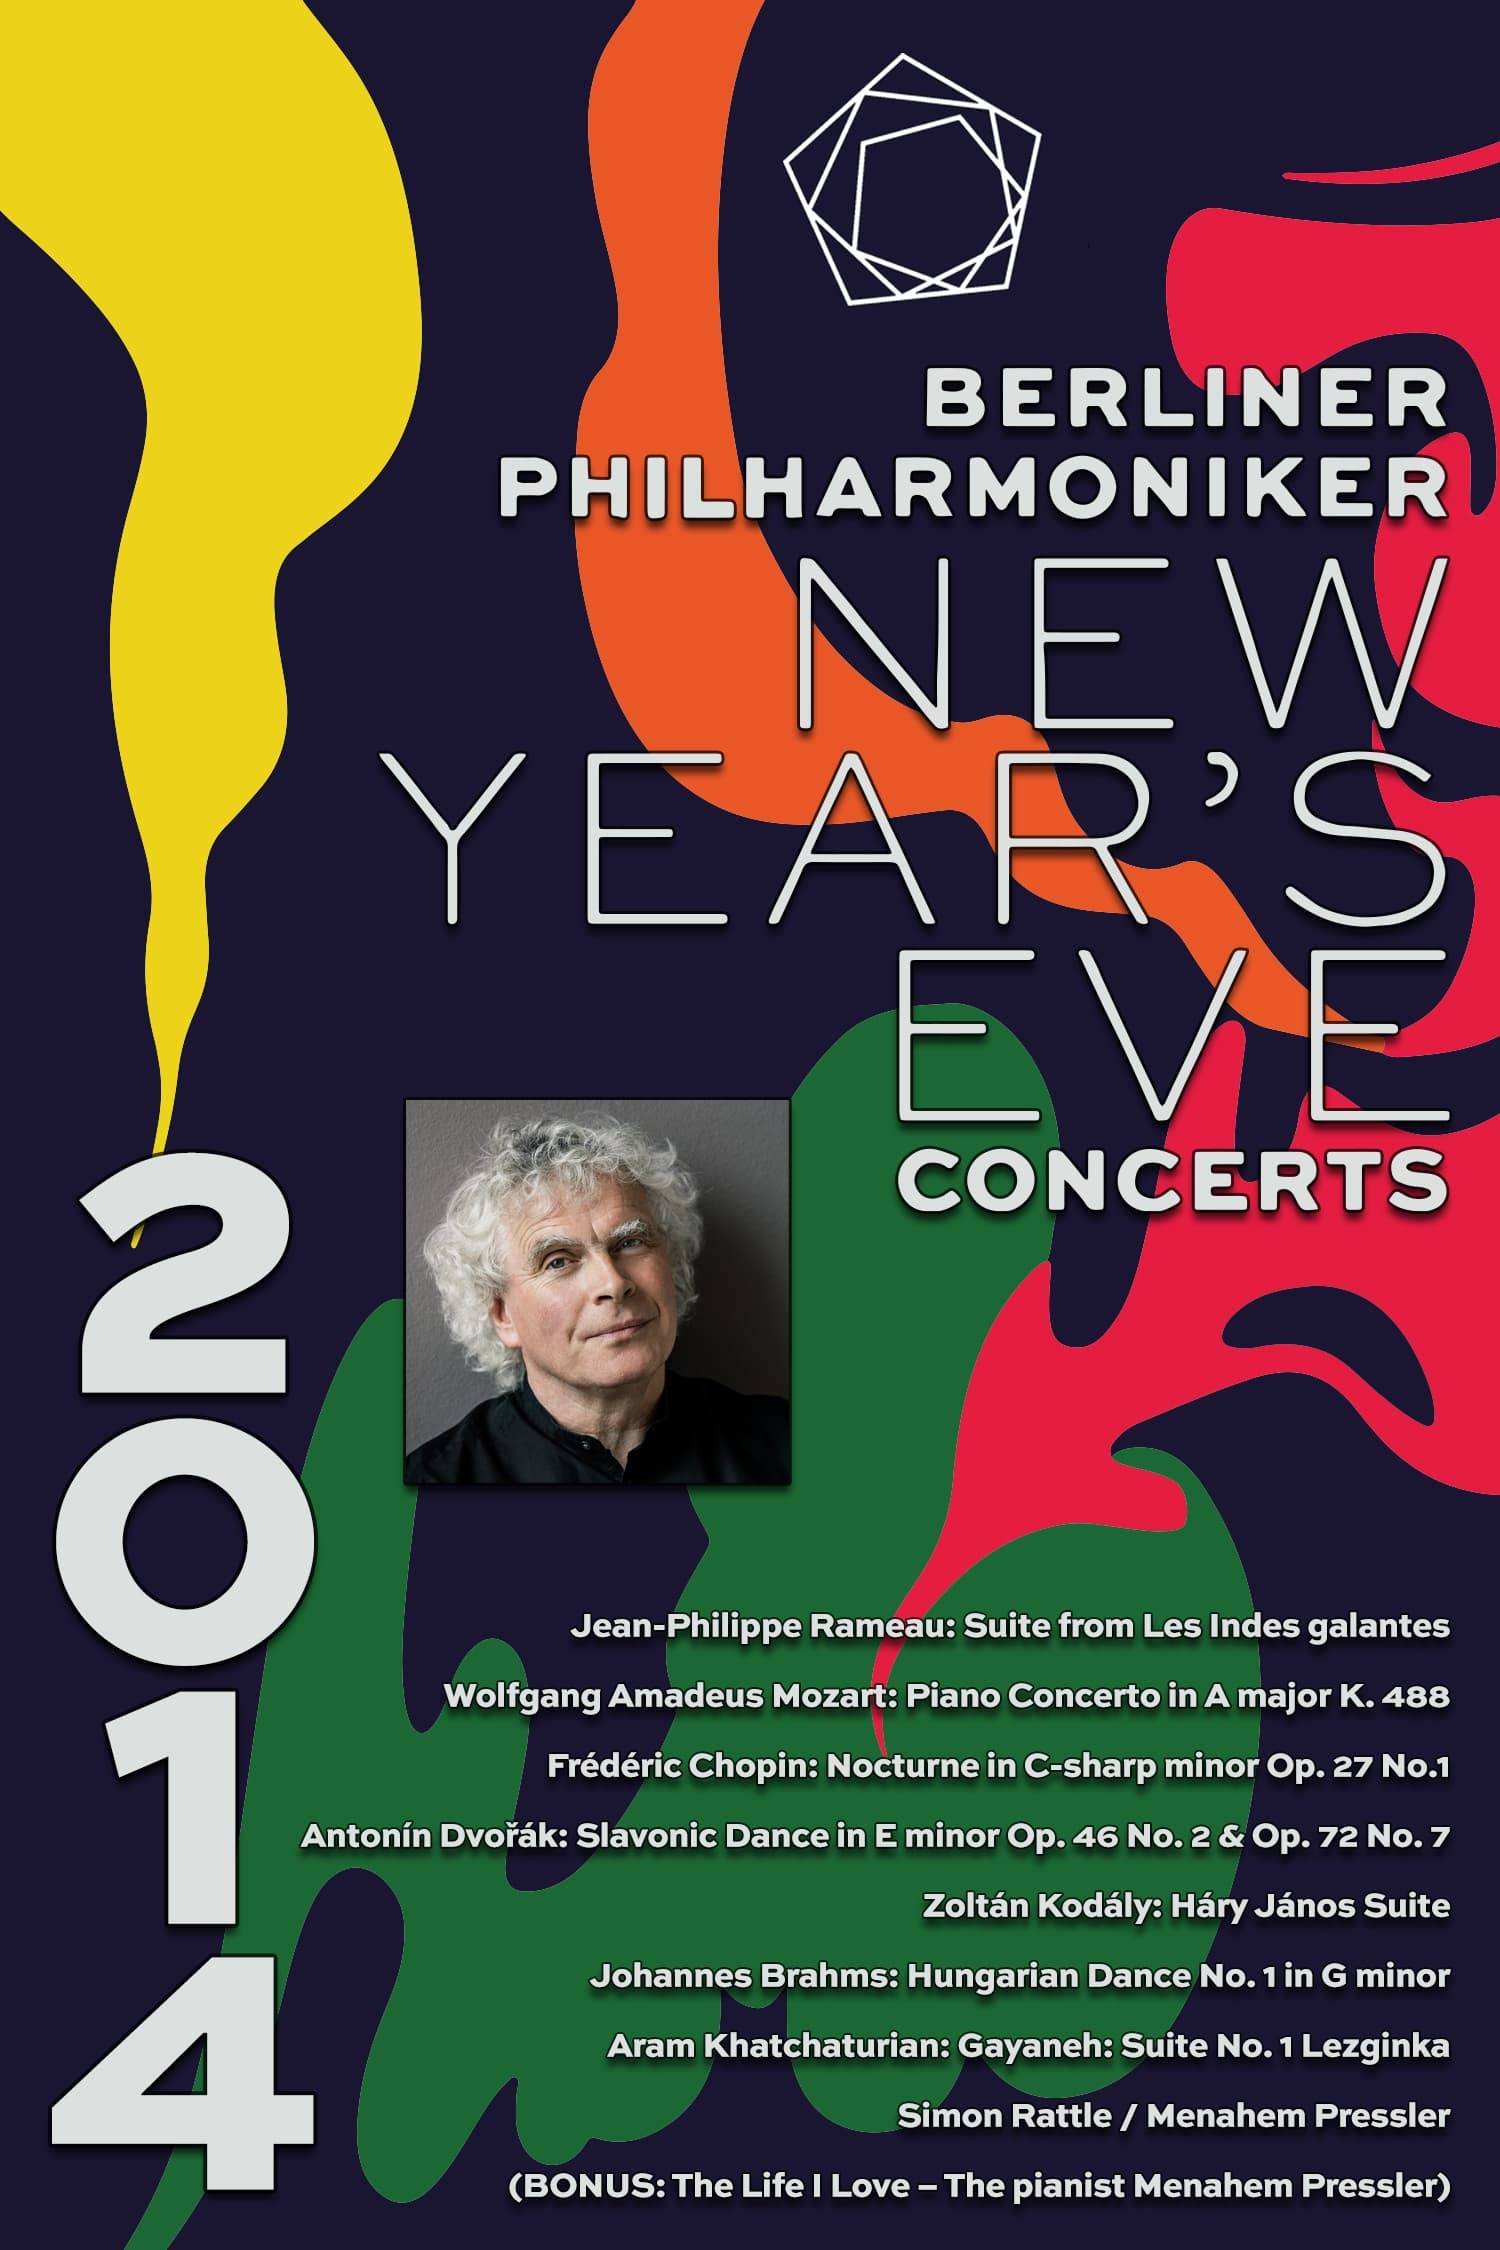 The Berliner Philharmoniker’s New Year’s Eve Concert: 2014